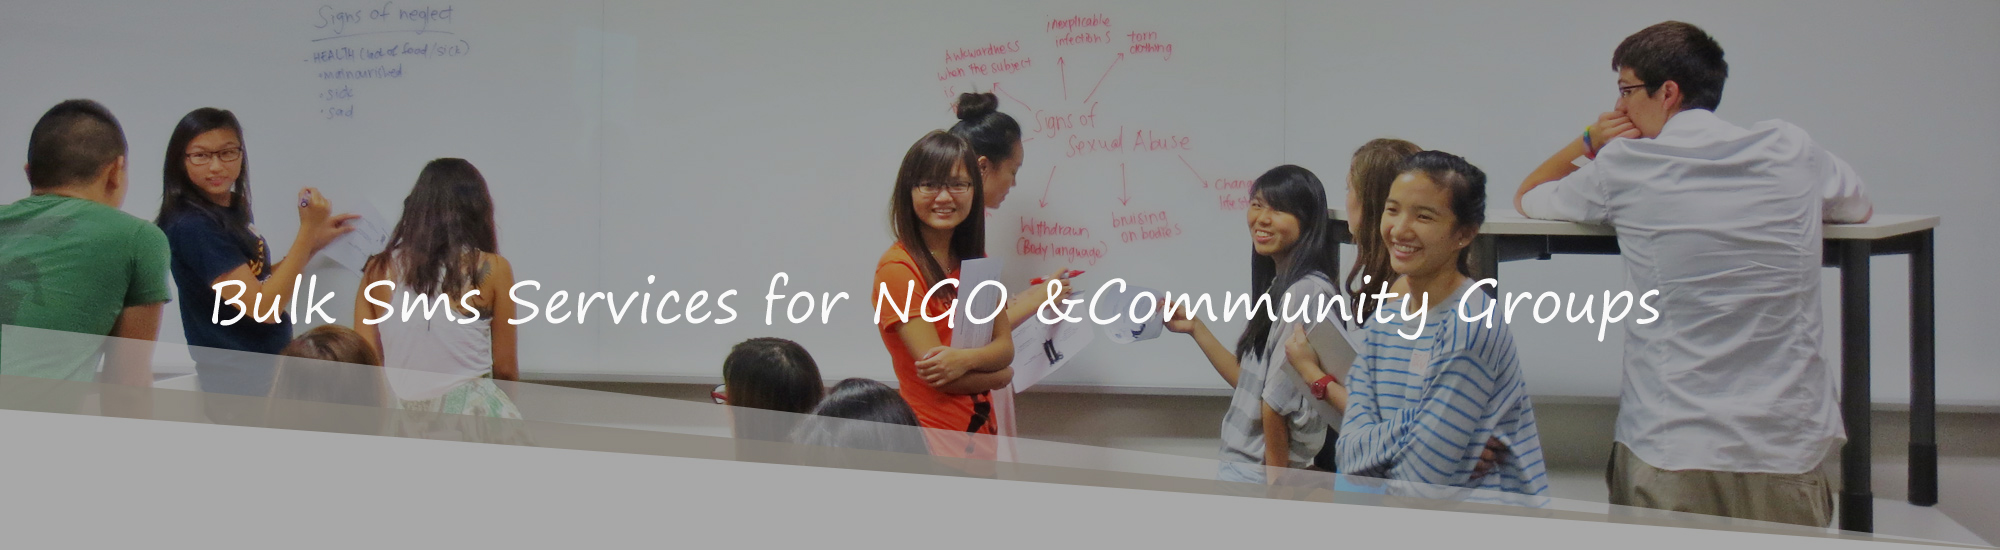 NGOs and community groups